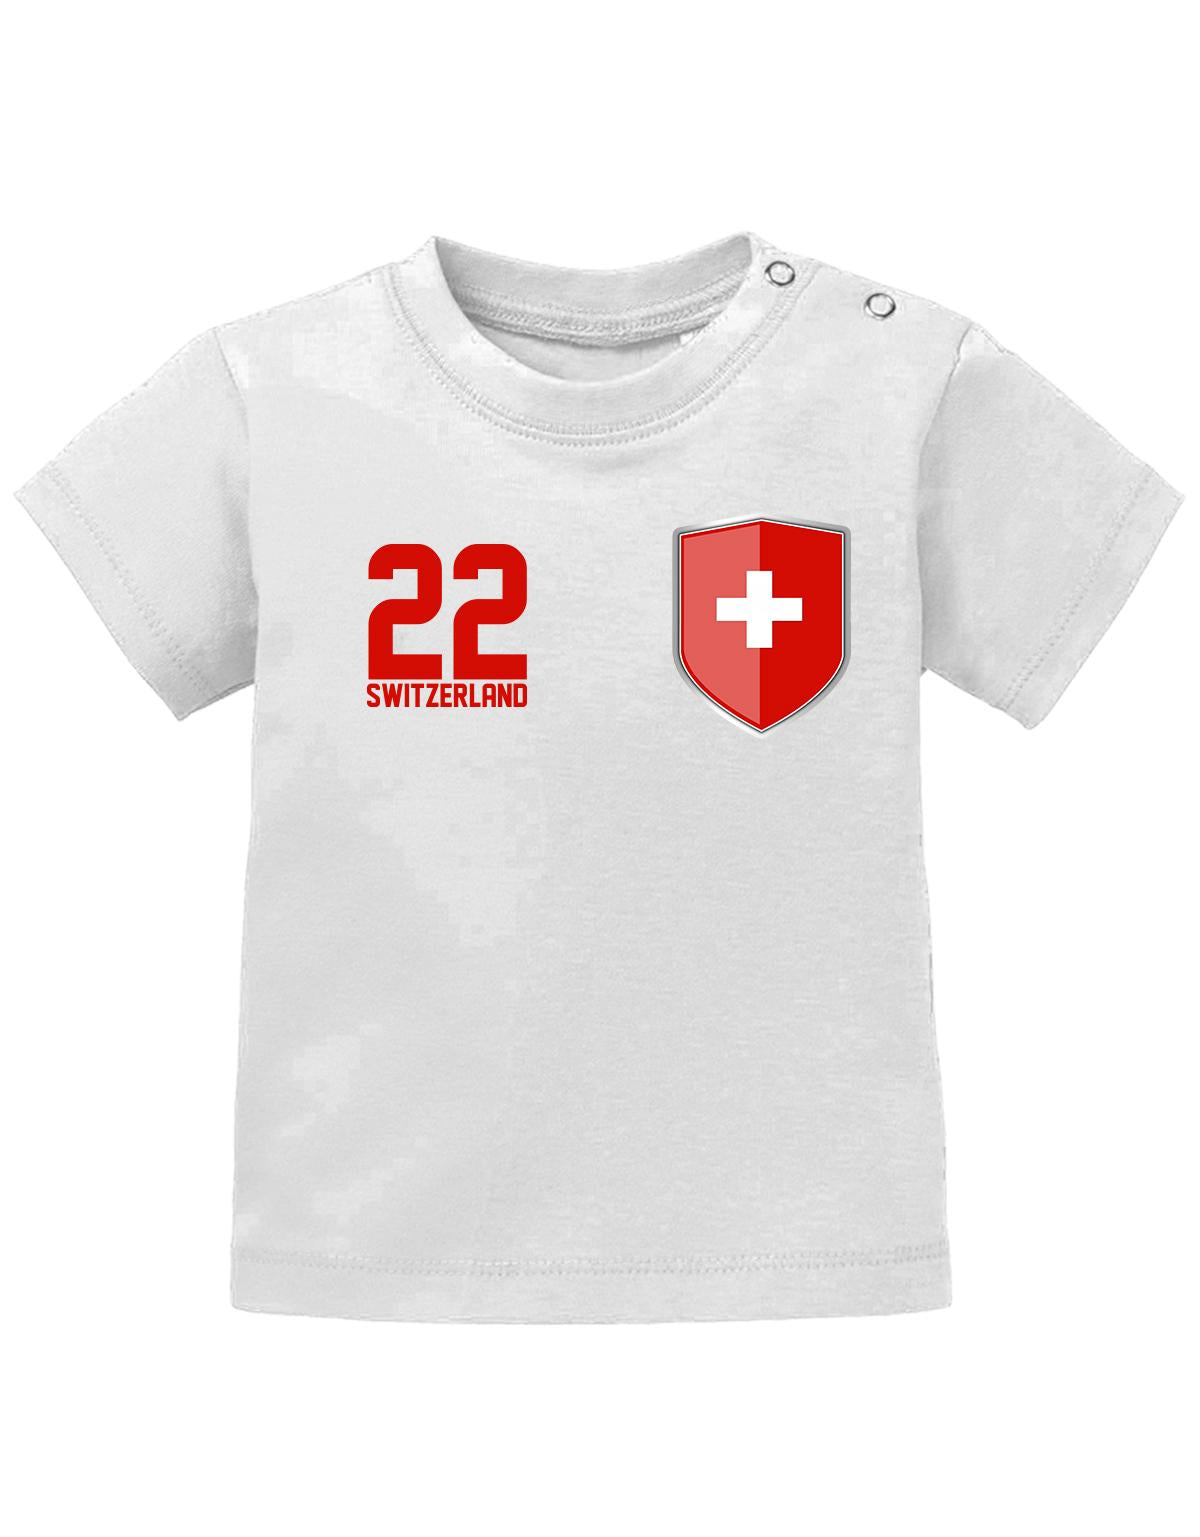 Switzerland 22 Wappen - EM WM - Schweiz Fan - Baby T-Shirt